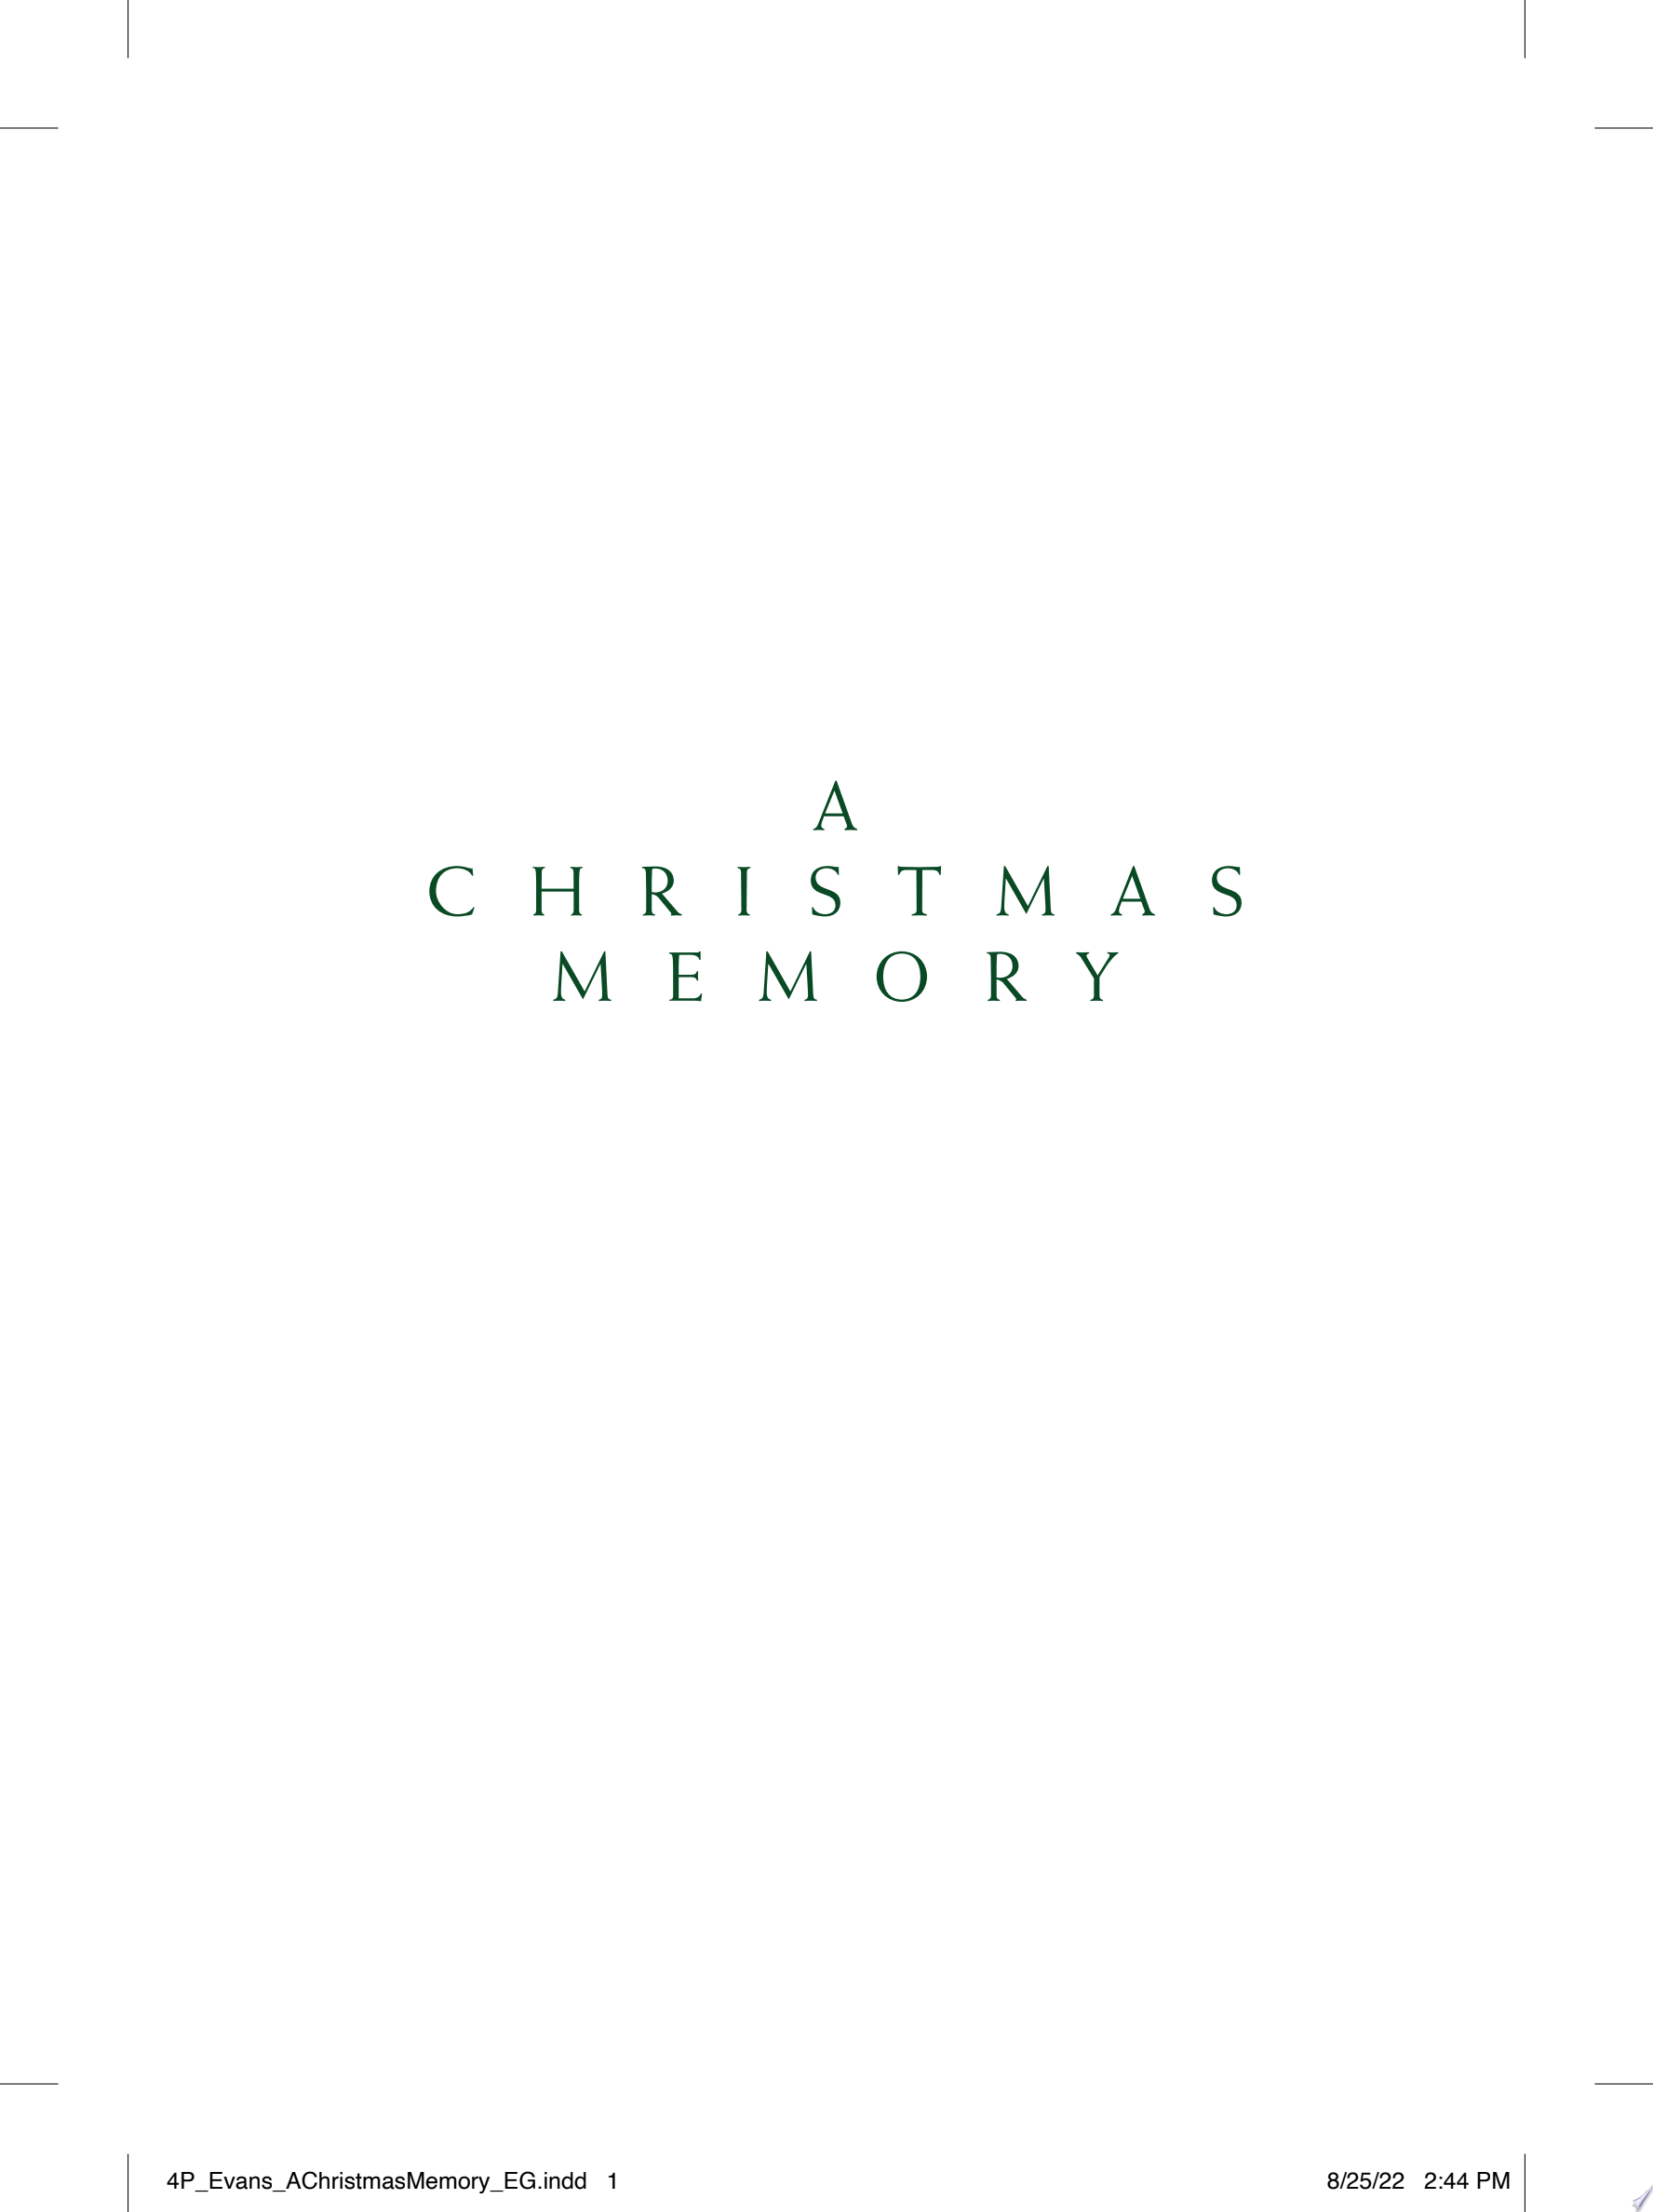 Image for "A Christmas Memory"